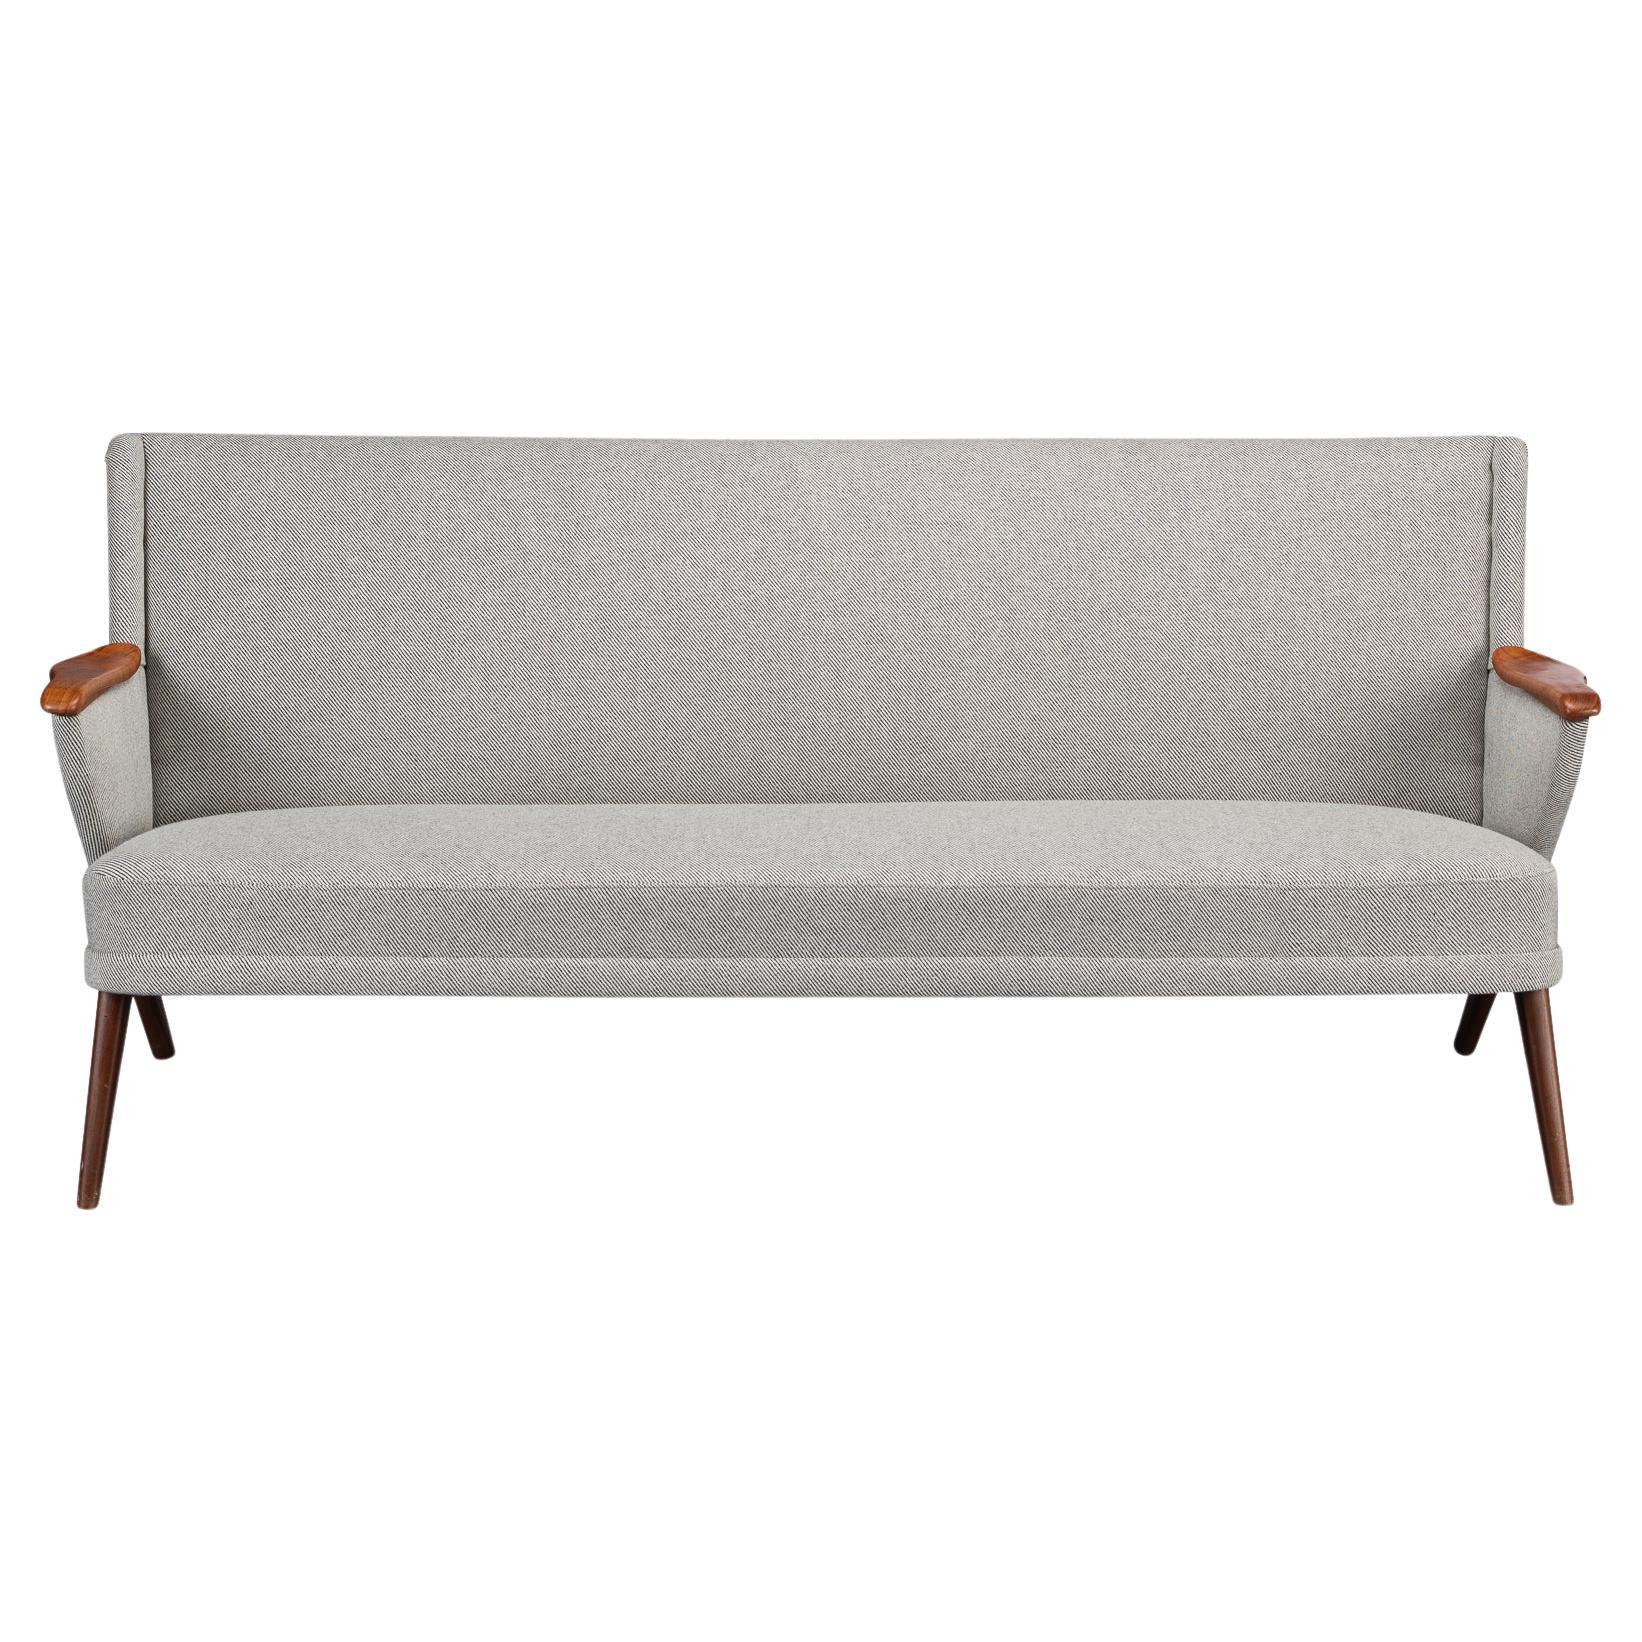 Reupholstered grey Danish Sofa by Johannes Andersen for CFC Silkeborg, 1960s